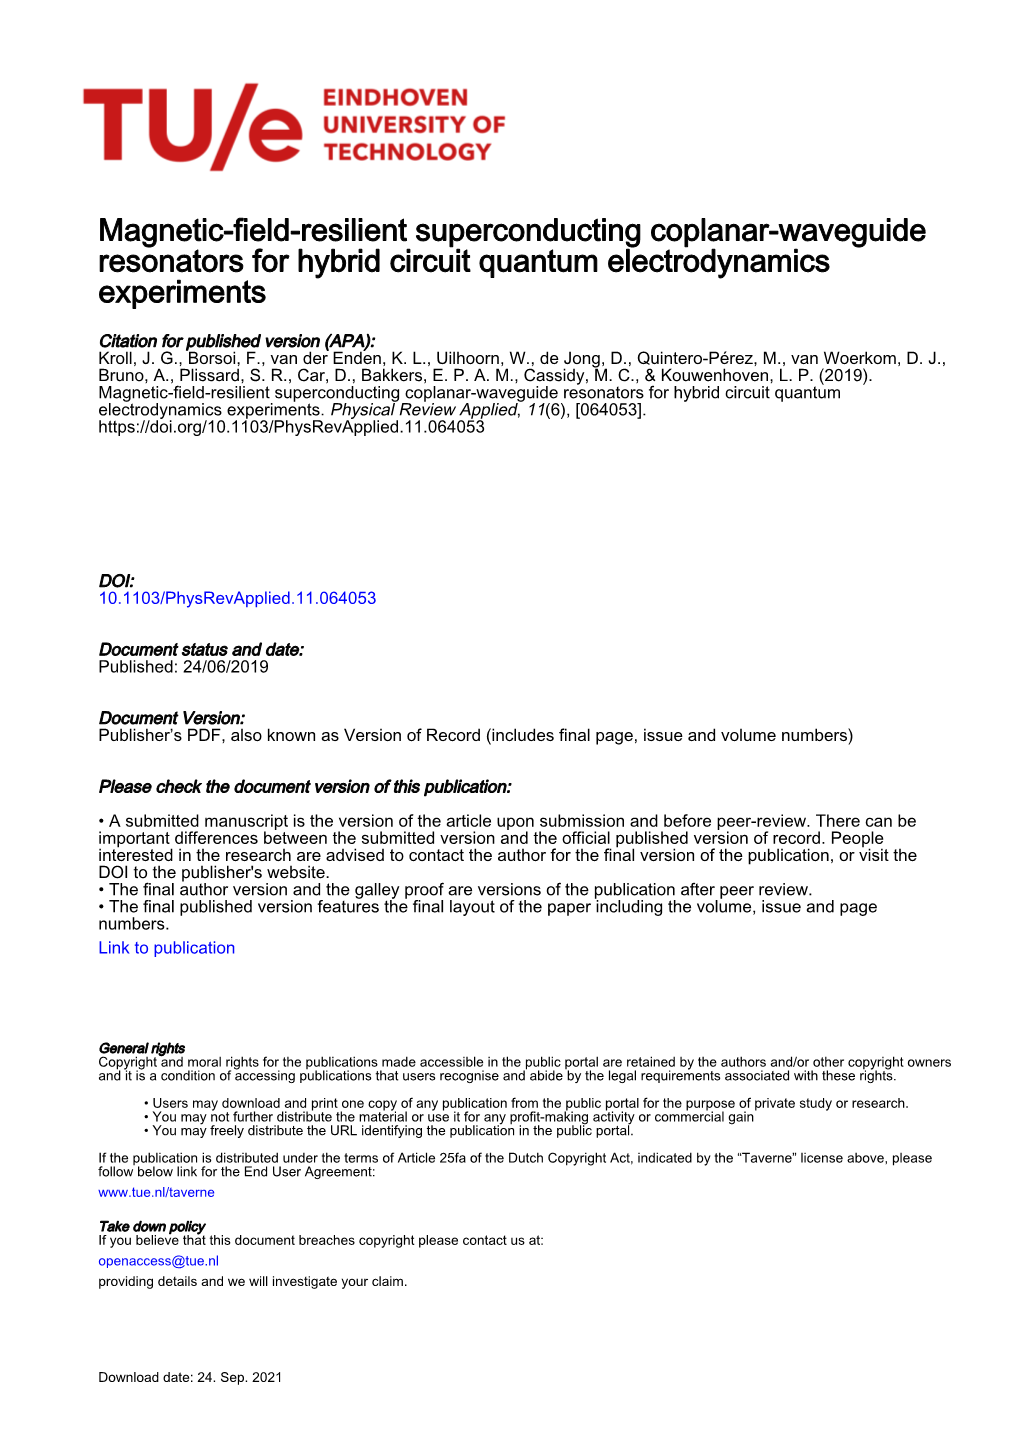 Magnetic-Field-Resilient Superconducting Coplanar-Waveguide Resonators for Hybrid Circuit Quantum Electrodynamics Experiments